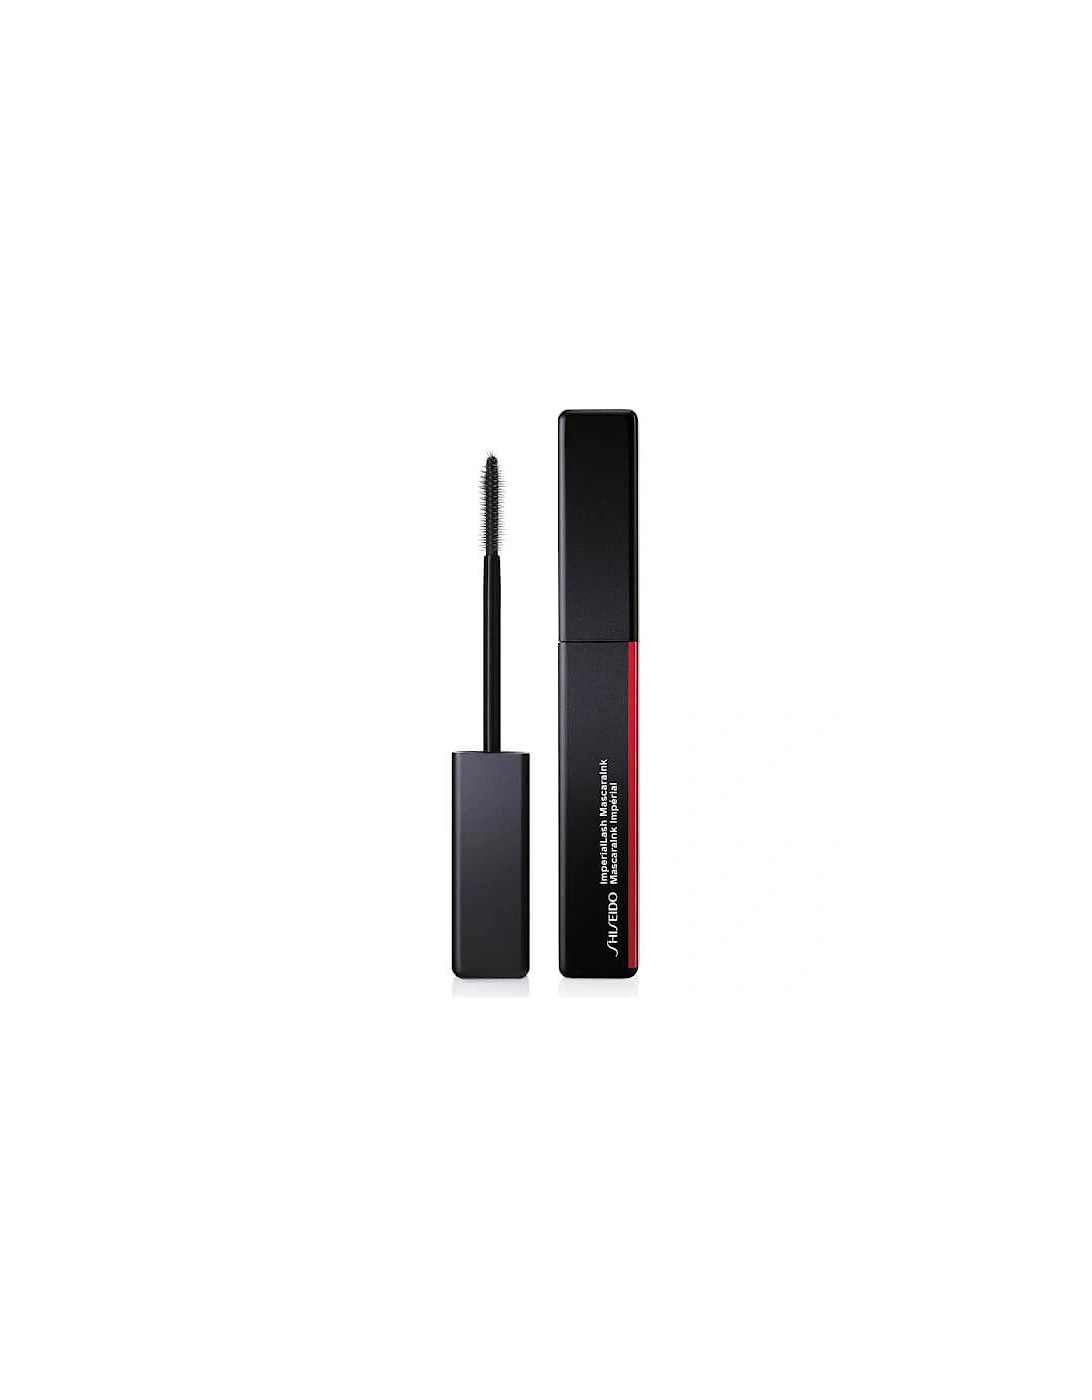 ImperialLash MascaraInk - Sumi Black 01 - Shiseido, 2 of 1